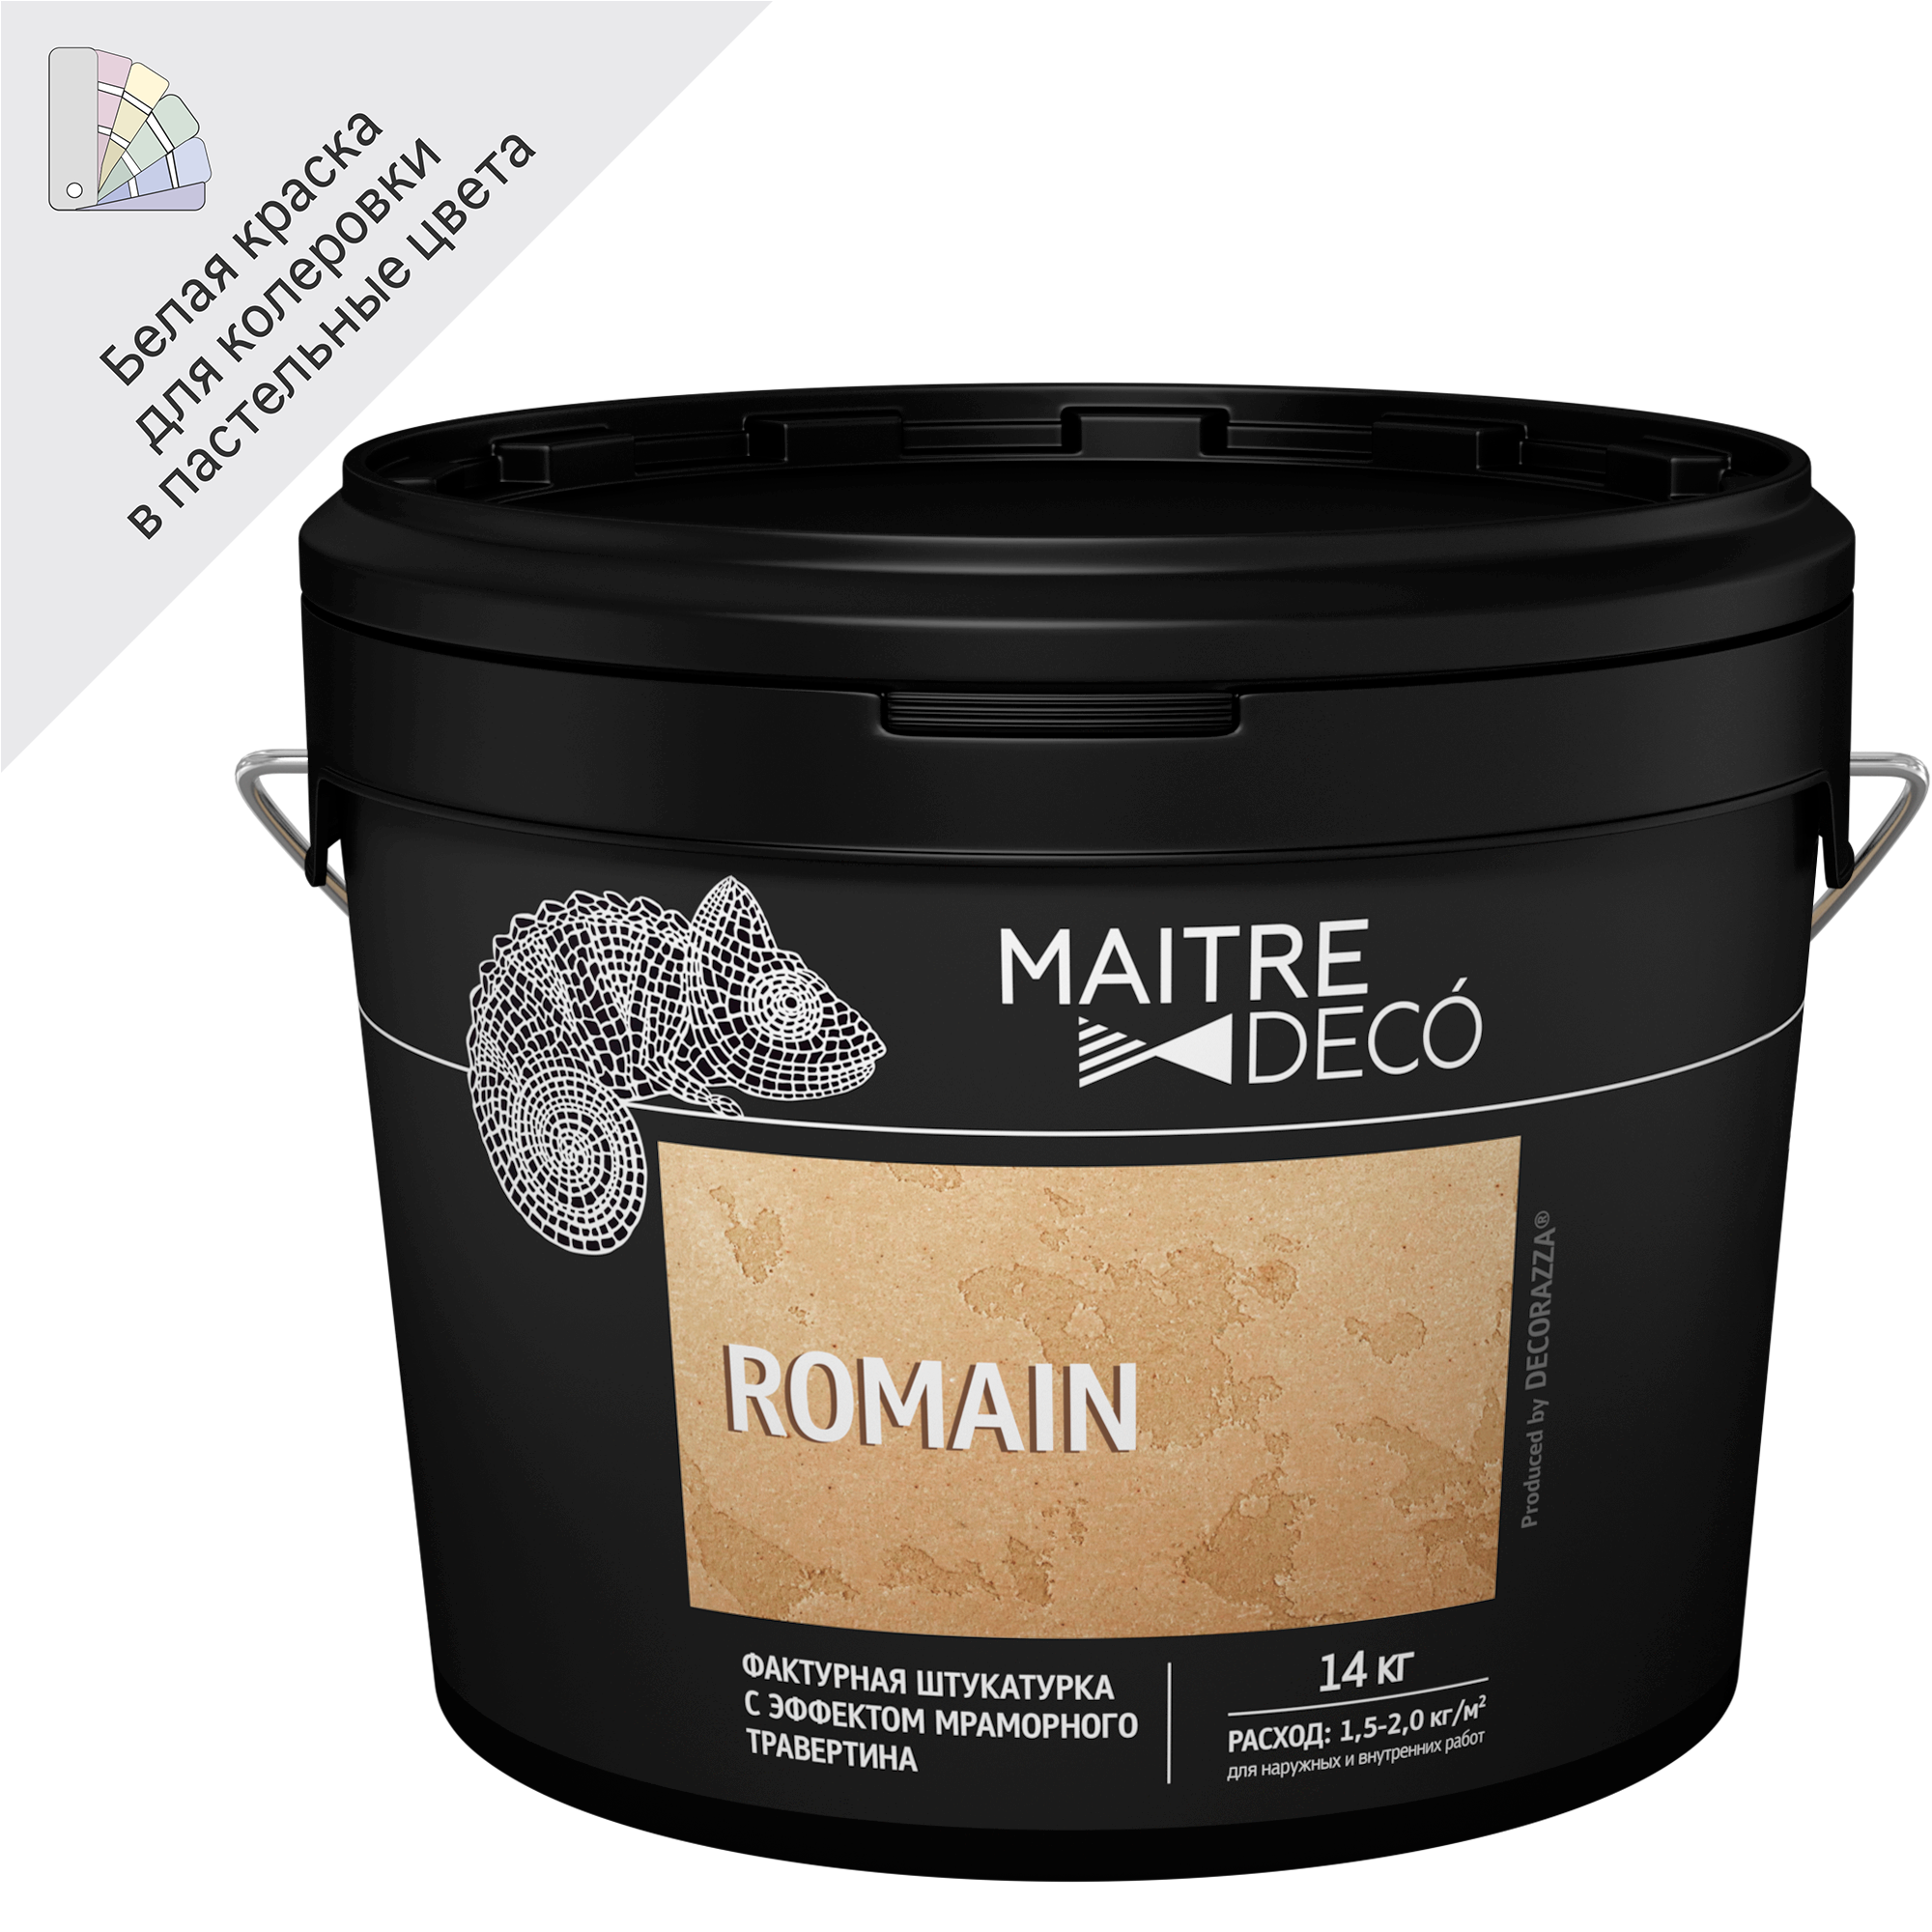 82891088 Фактурная штукатурка «Romain» эффект мраморного травертина 14 кг STLM-0037582 MAITRE DECO